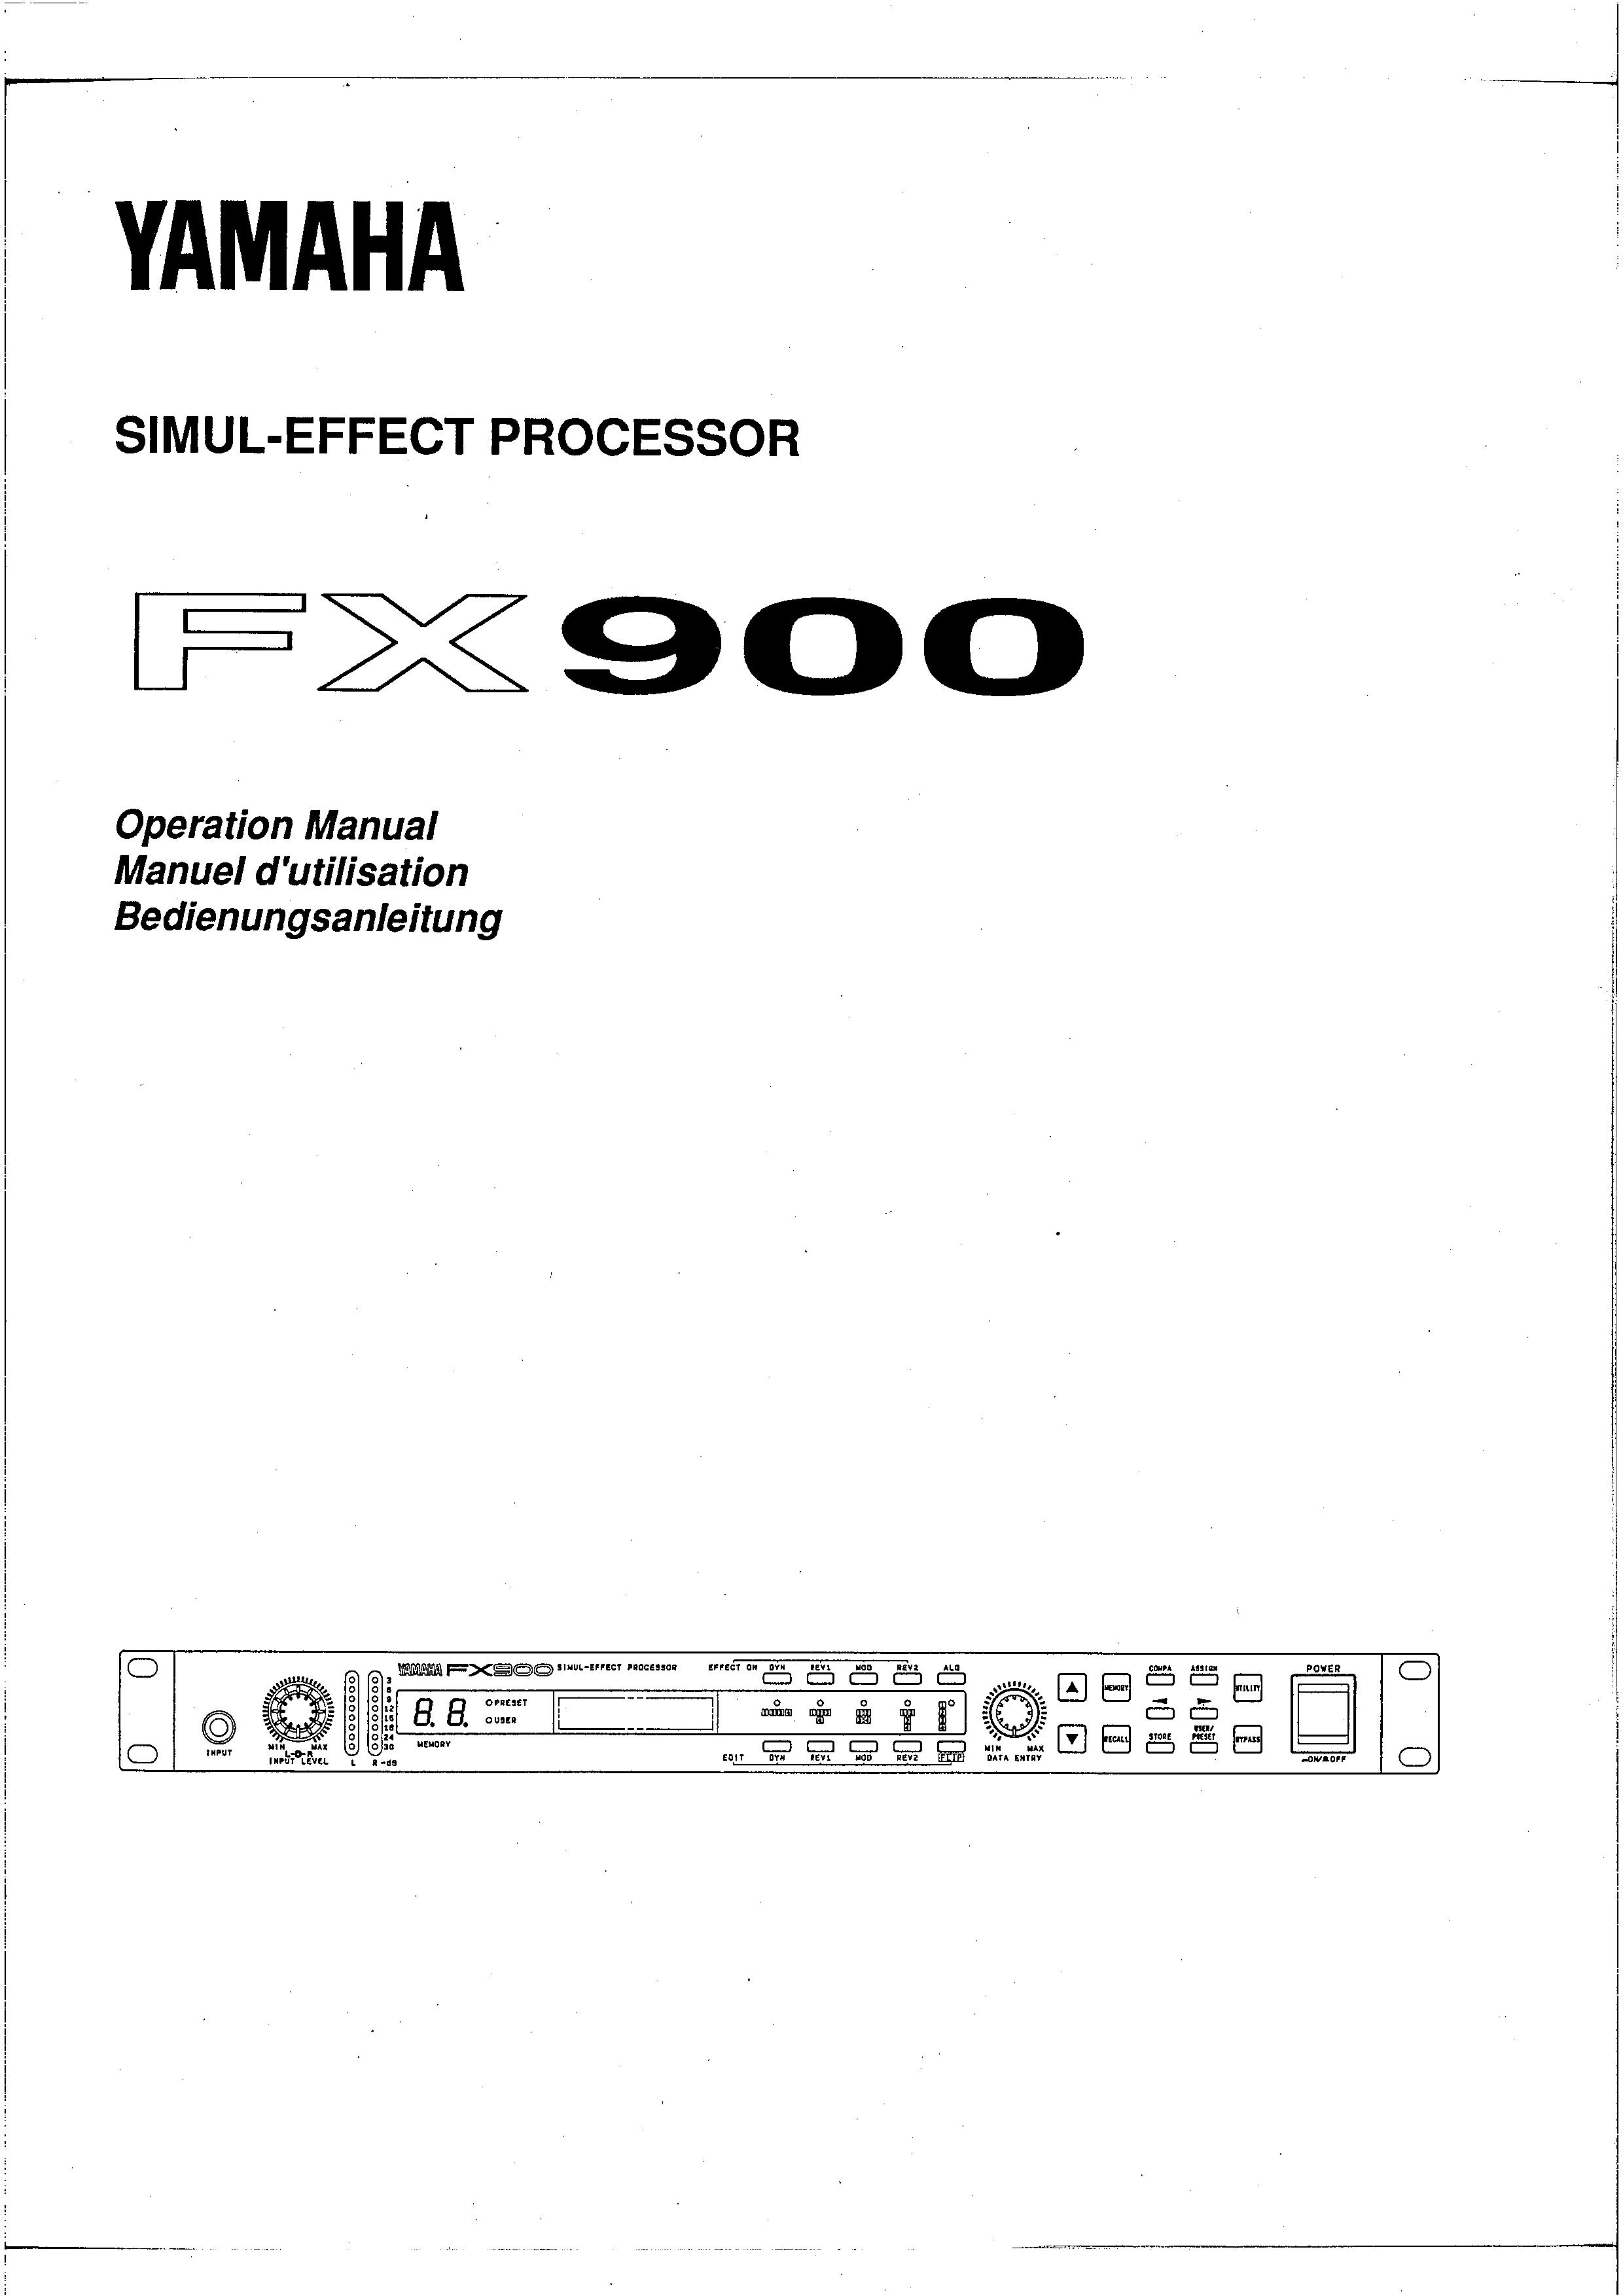 Yamaha FX900 DJ Equipment User Manual